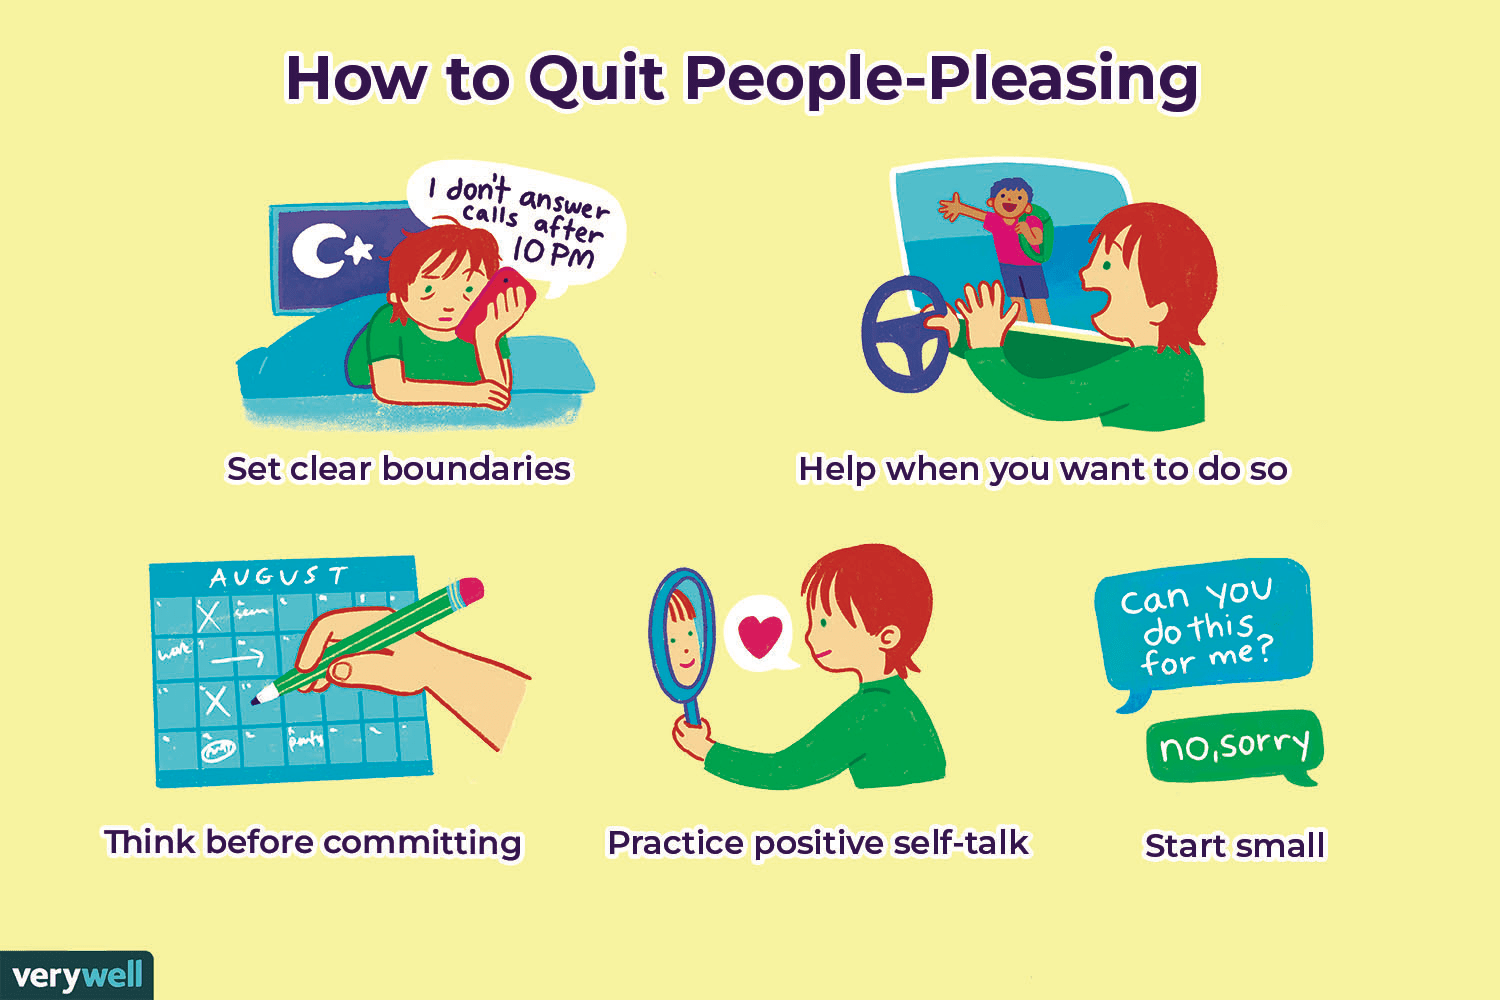 5 ways to quit people-pleasing